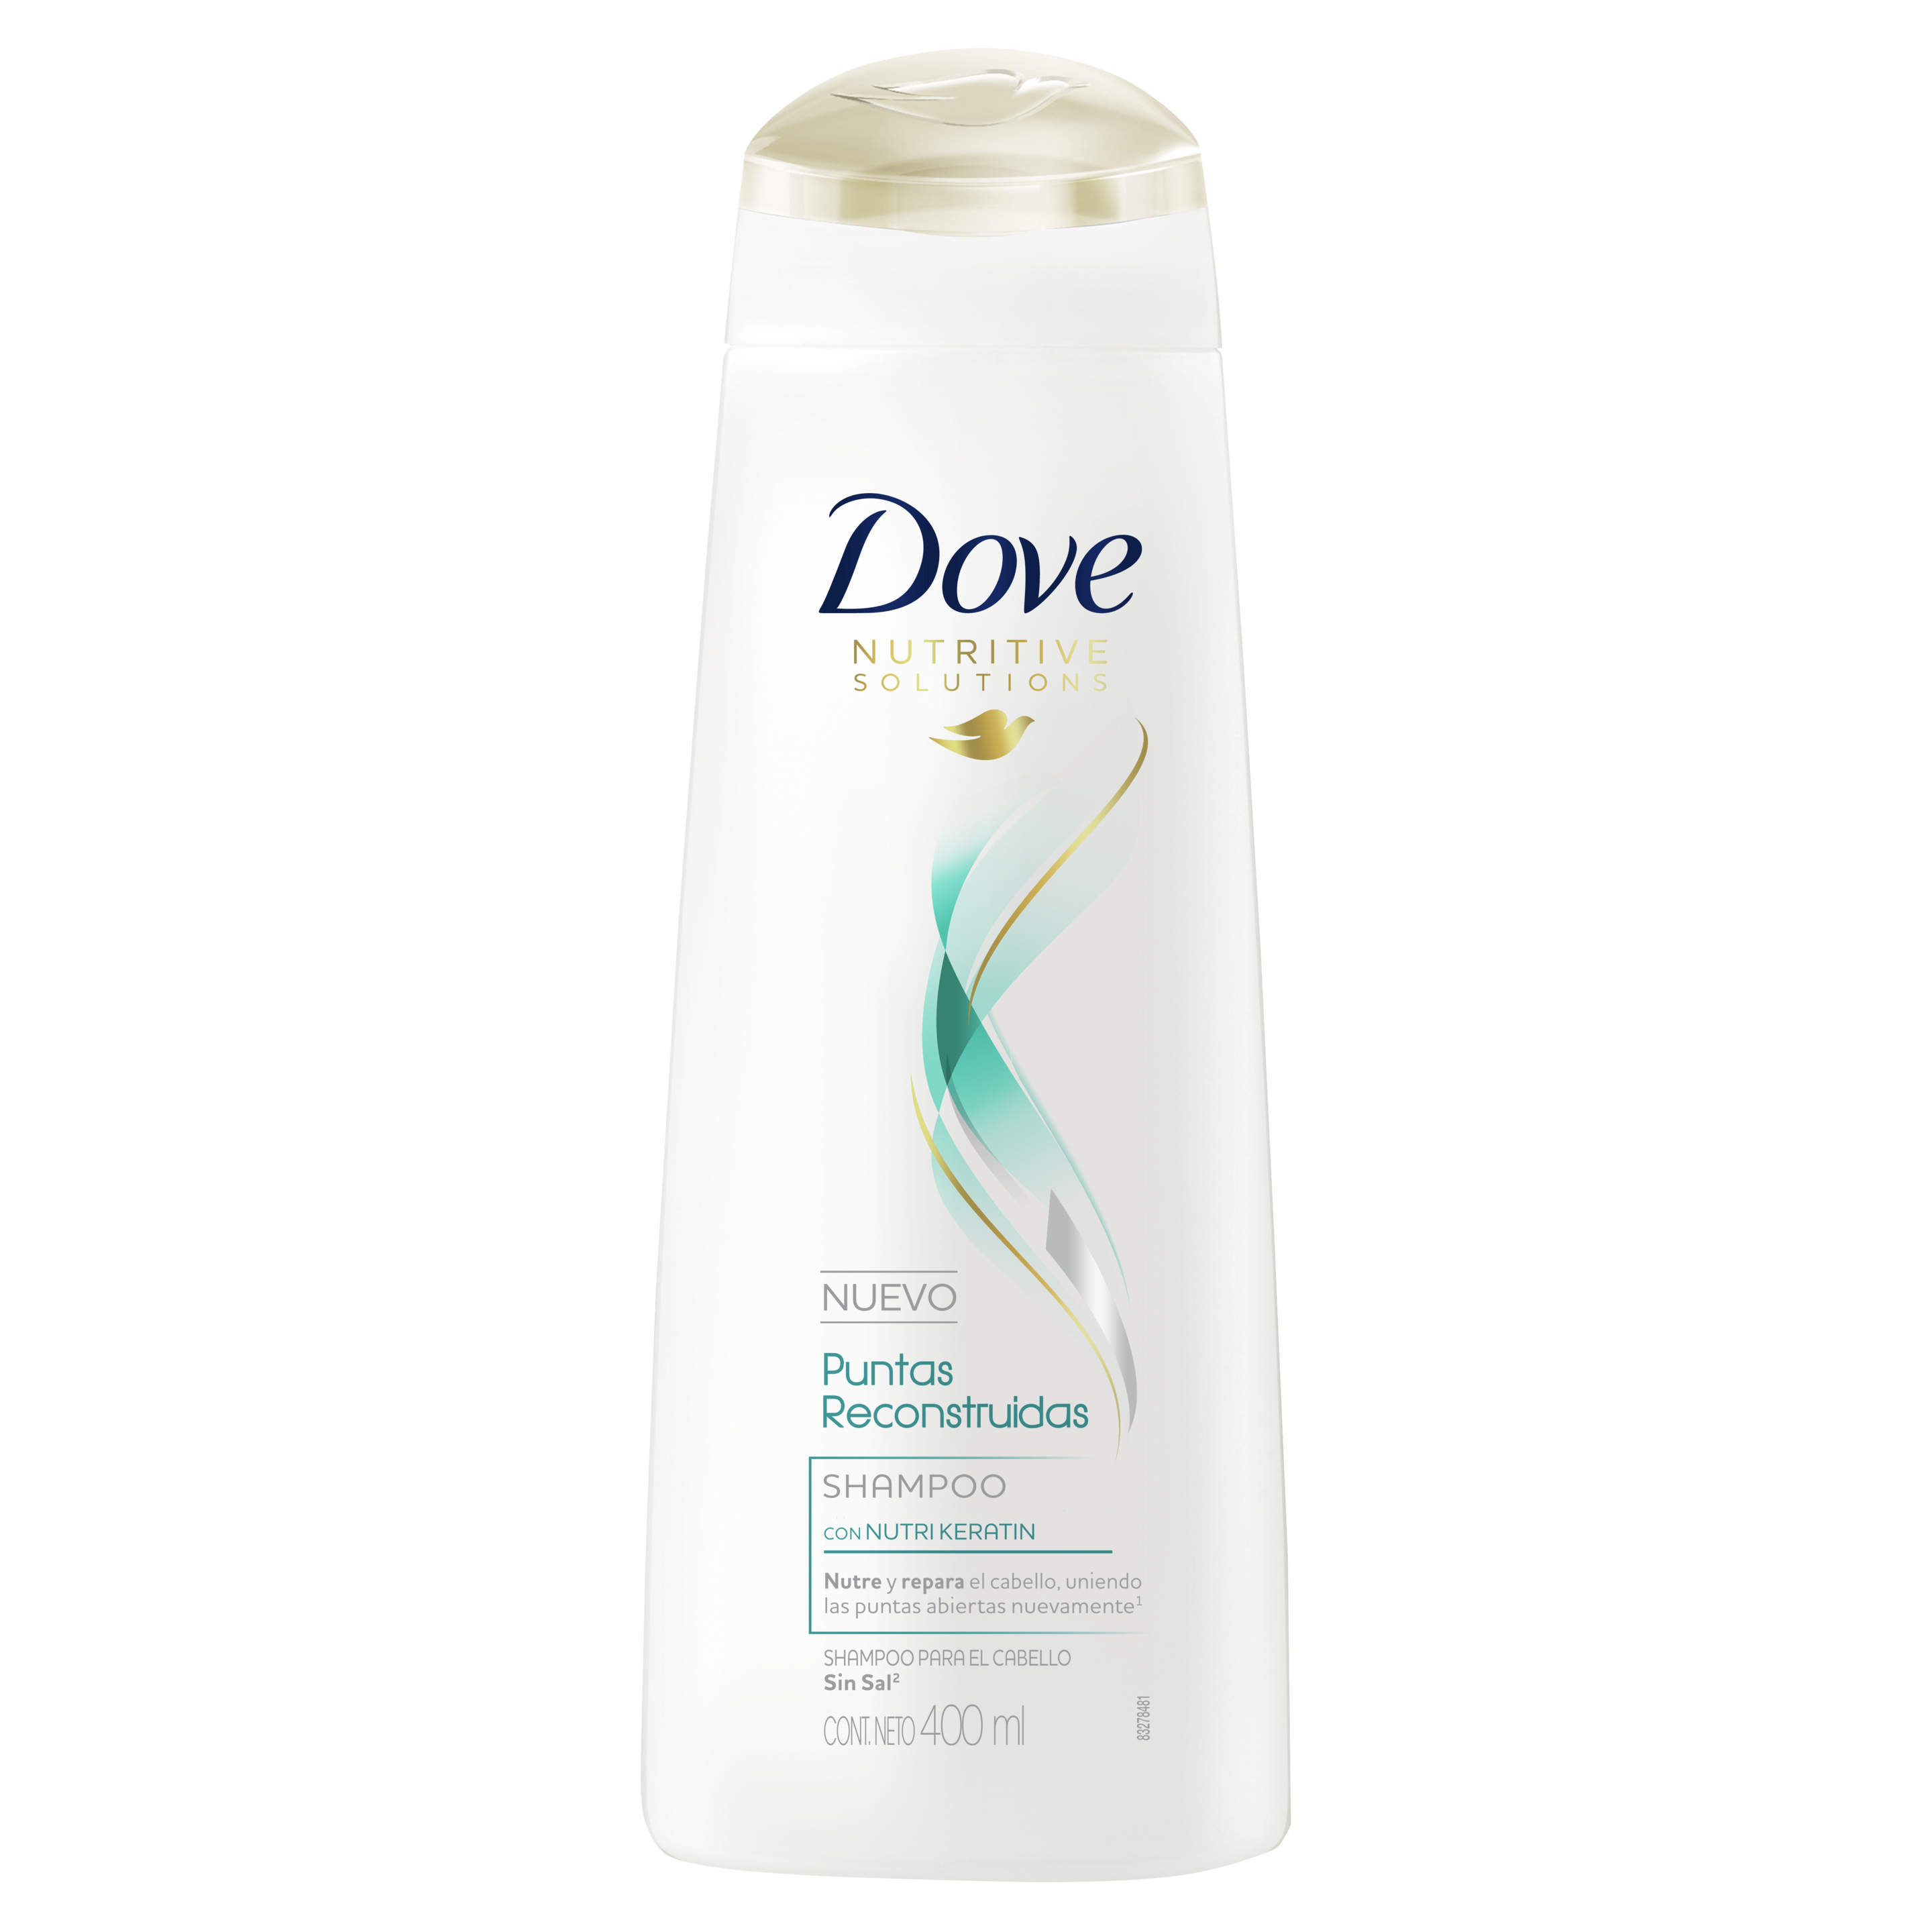 Dove Shampoo Puntas Reconstruidas 400ml